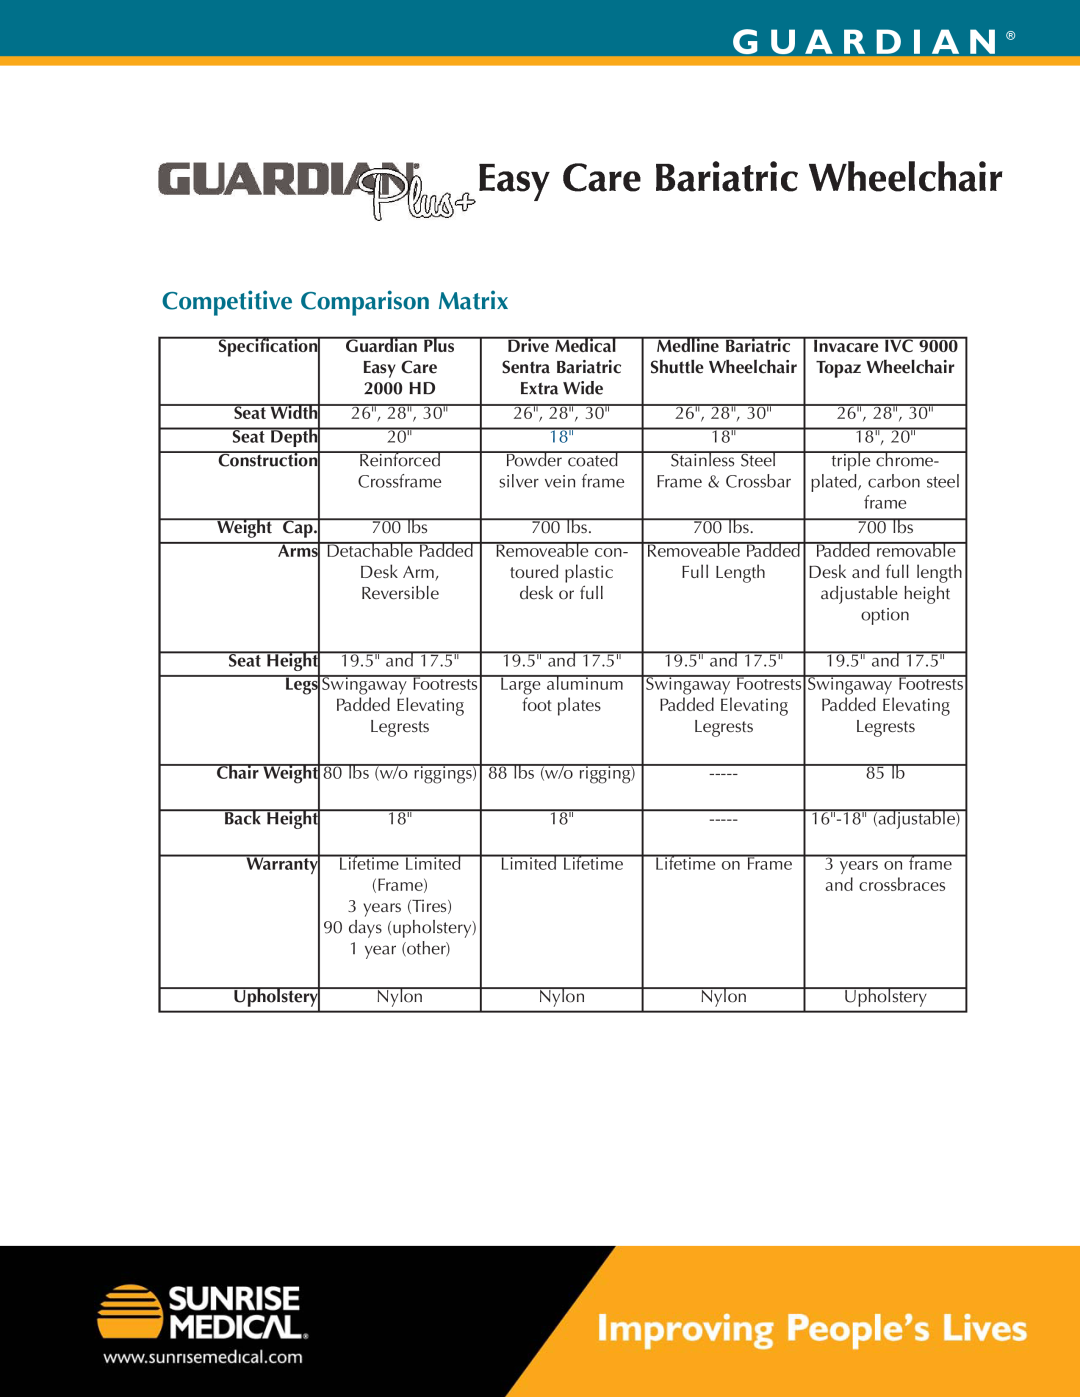 Sunrise Medical 2HD26RADPE Competitive Comparison Matrix, Guardian Easy Care Bariatric Wheelchair, G U A R D I A N 